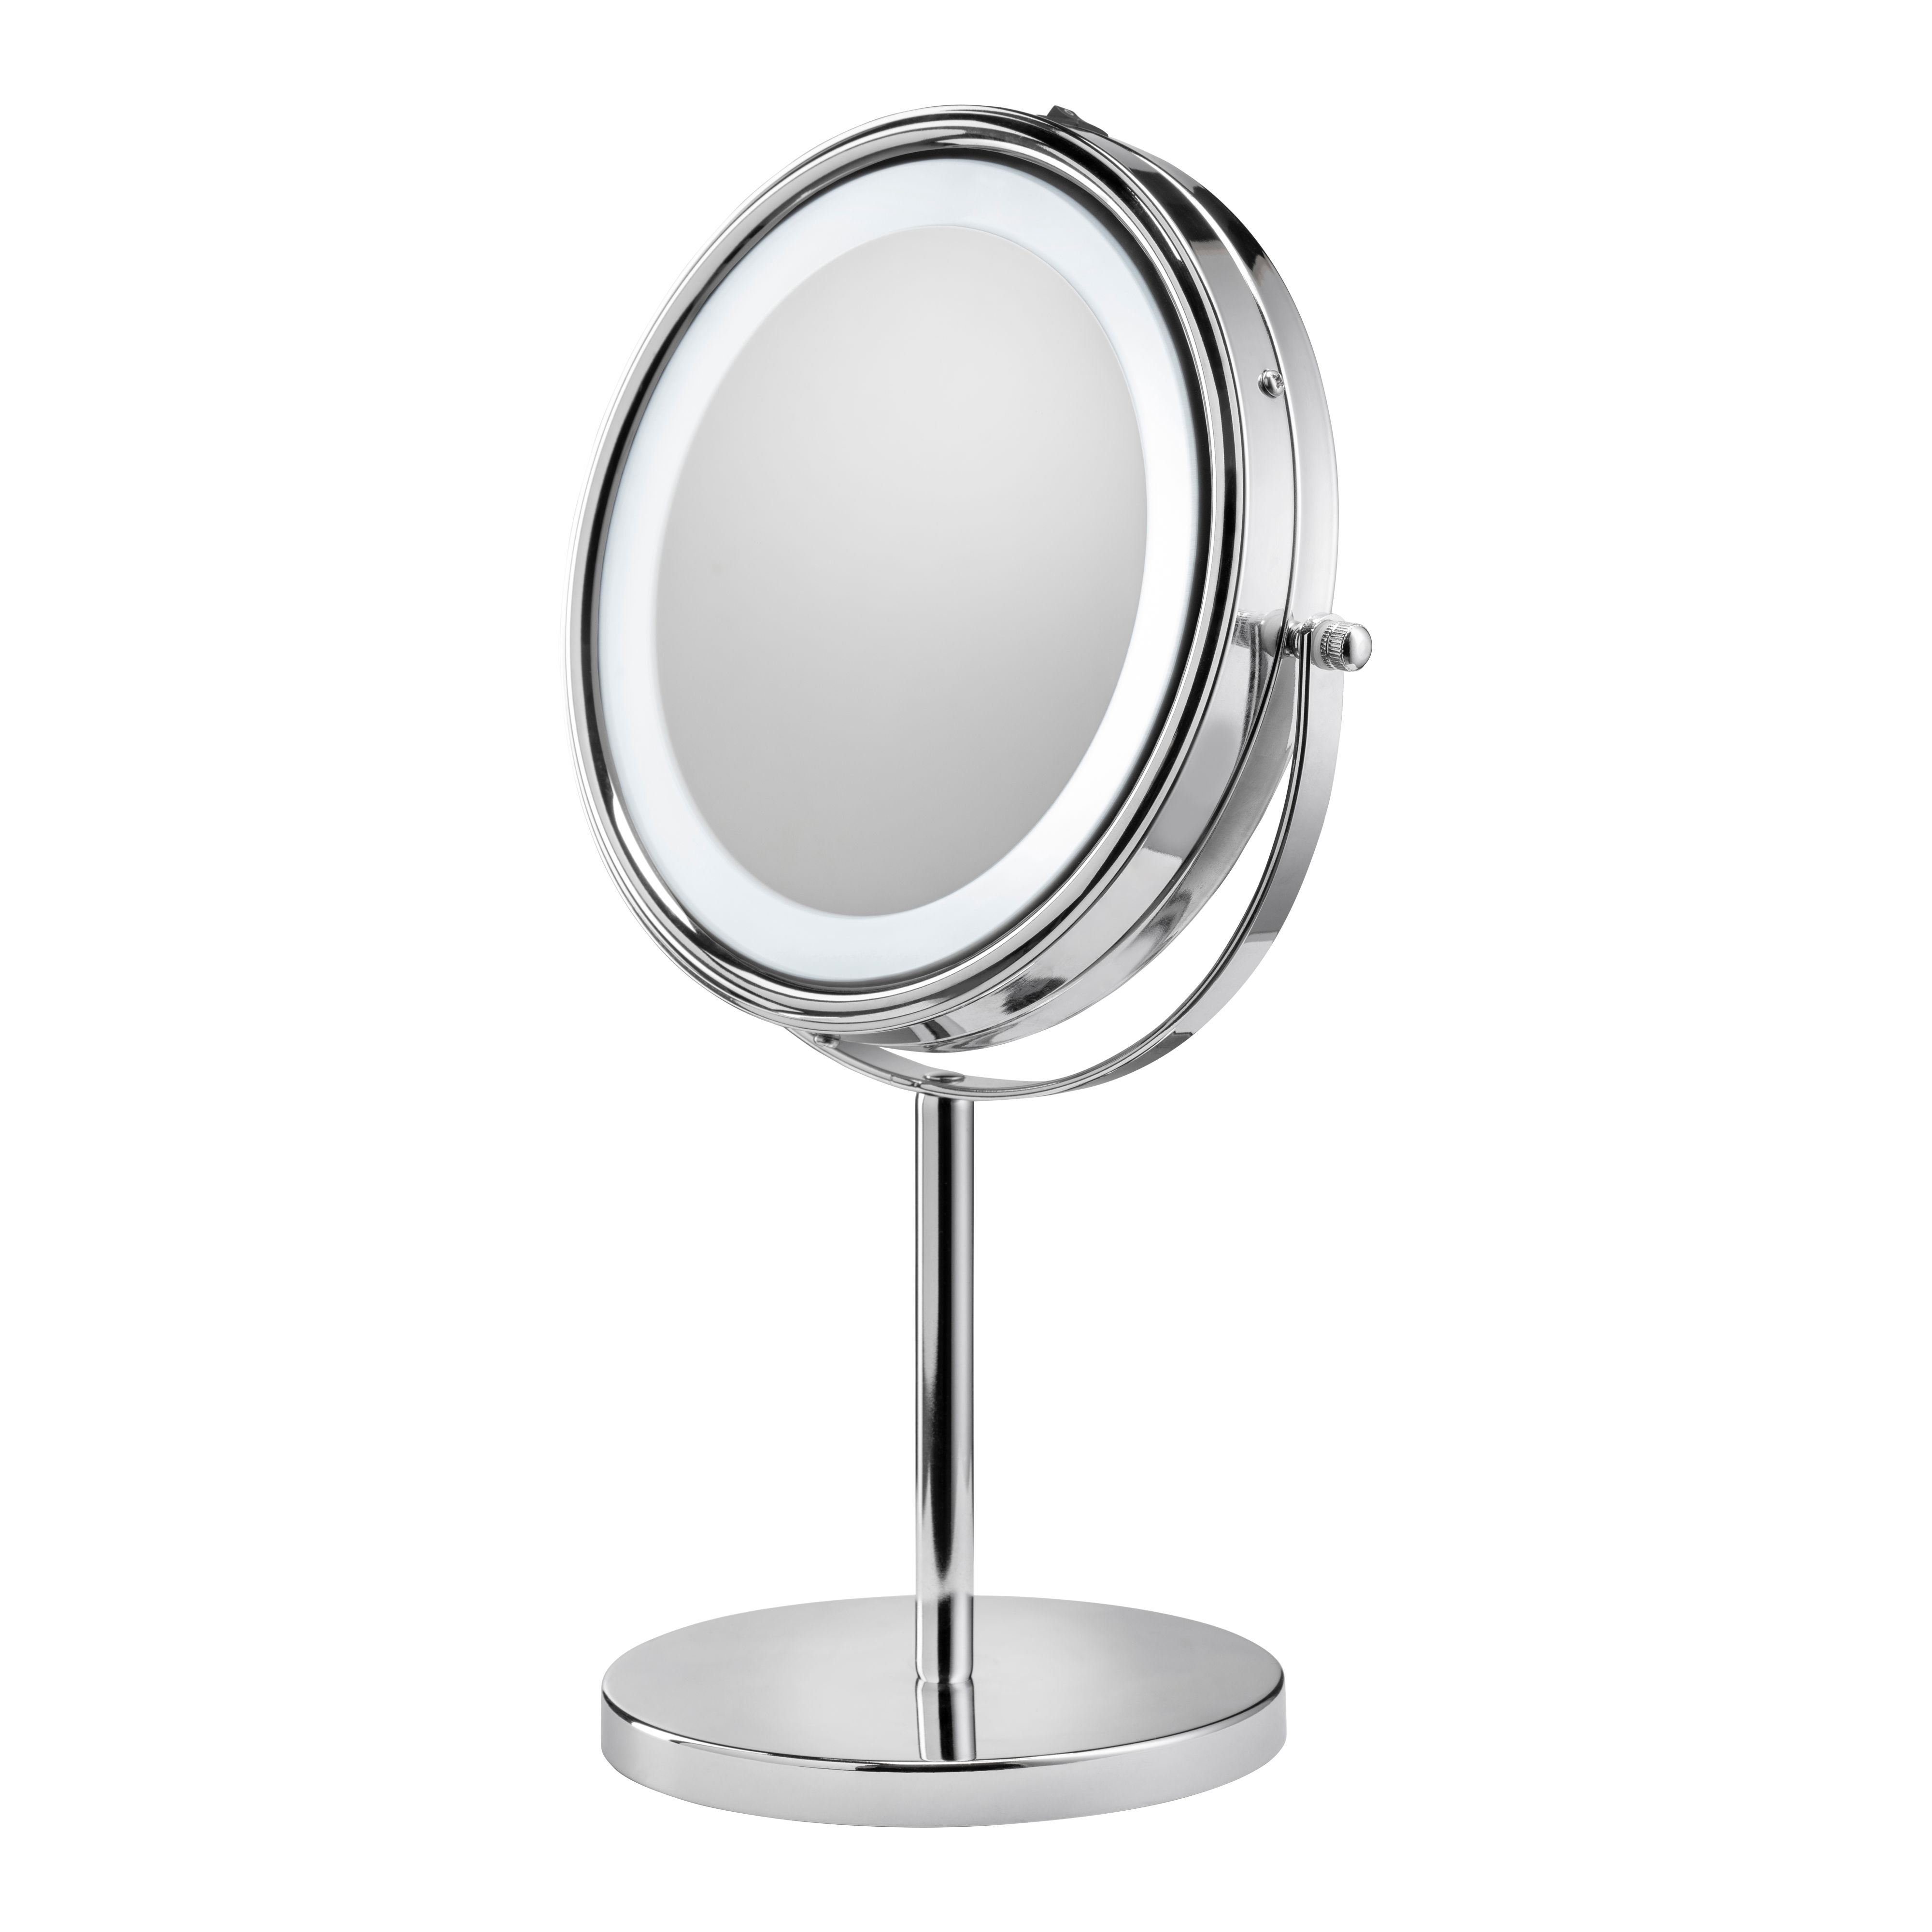 Croydex Chrome effect Round Freestanding Bathroom Illuminated Cosmetic mirror (H)35.9cm (W)23.5cm